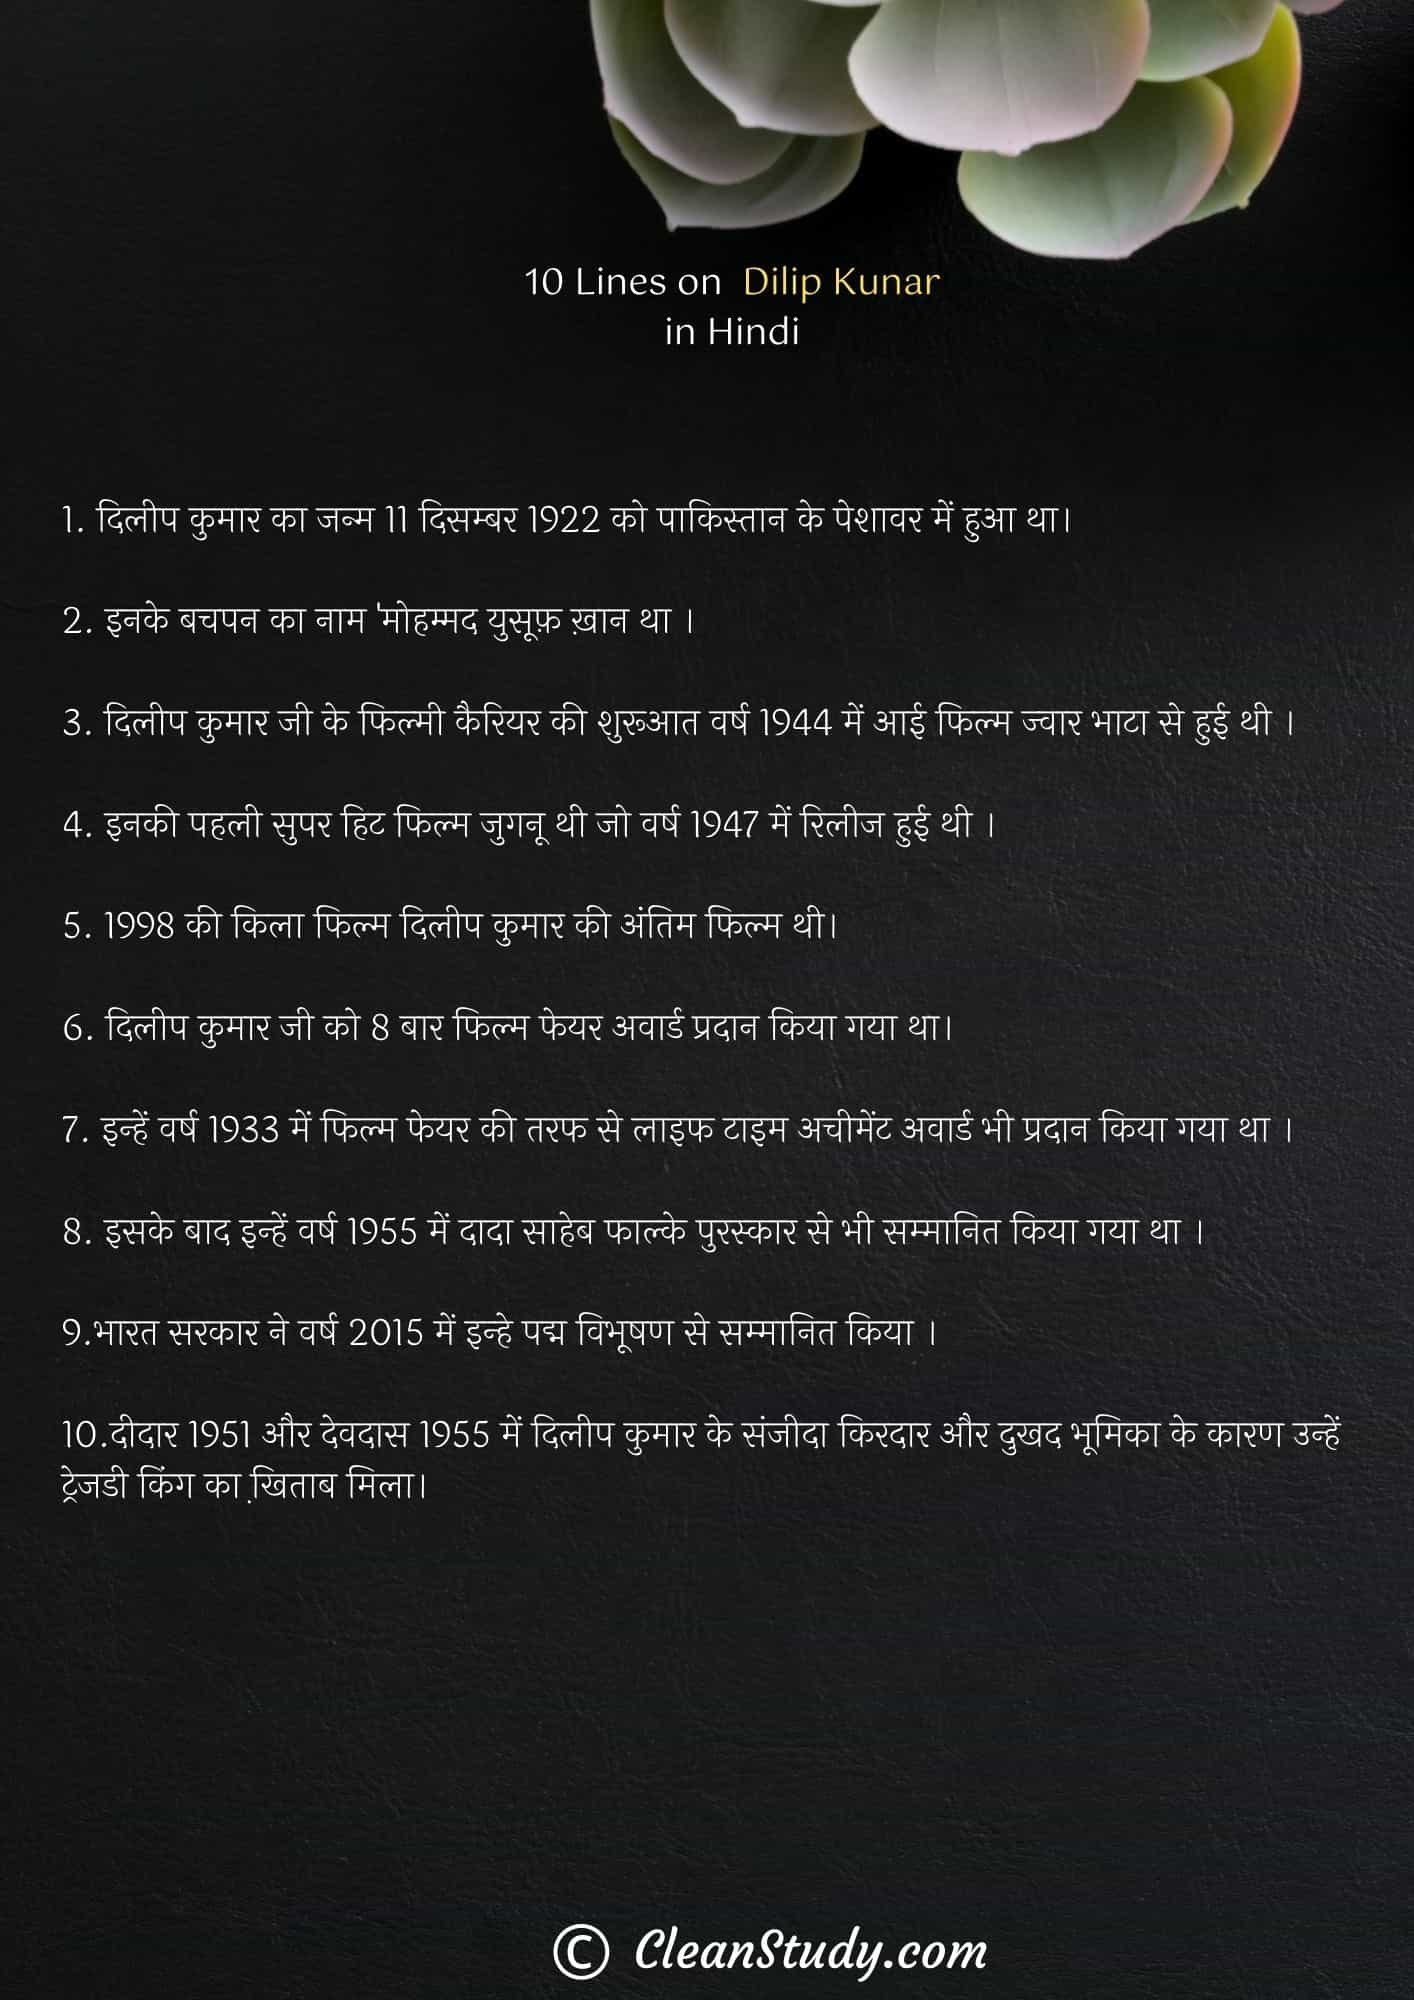 10 Lines on Dilip Kumar in Hindi